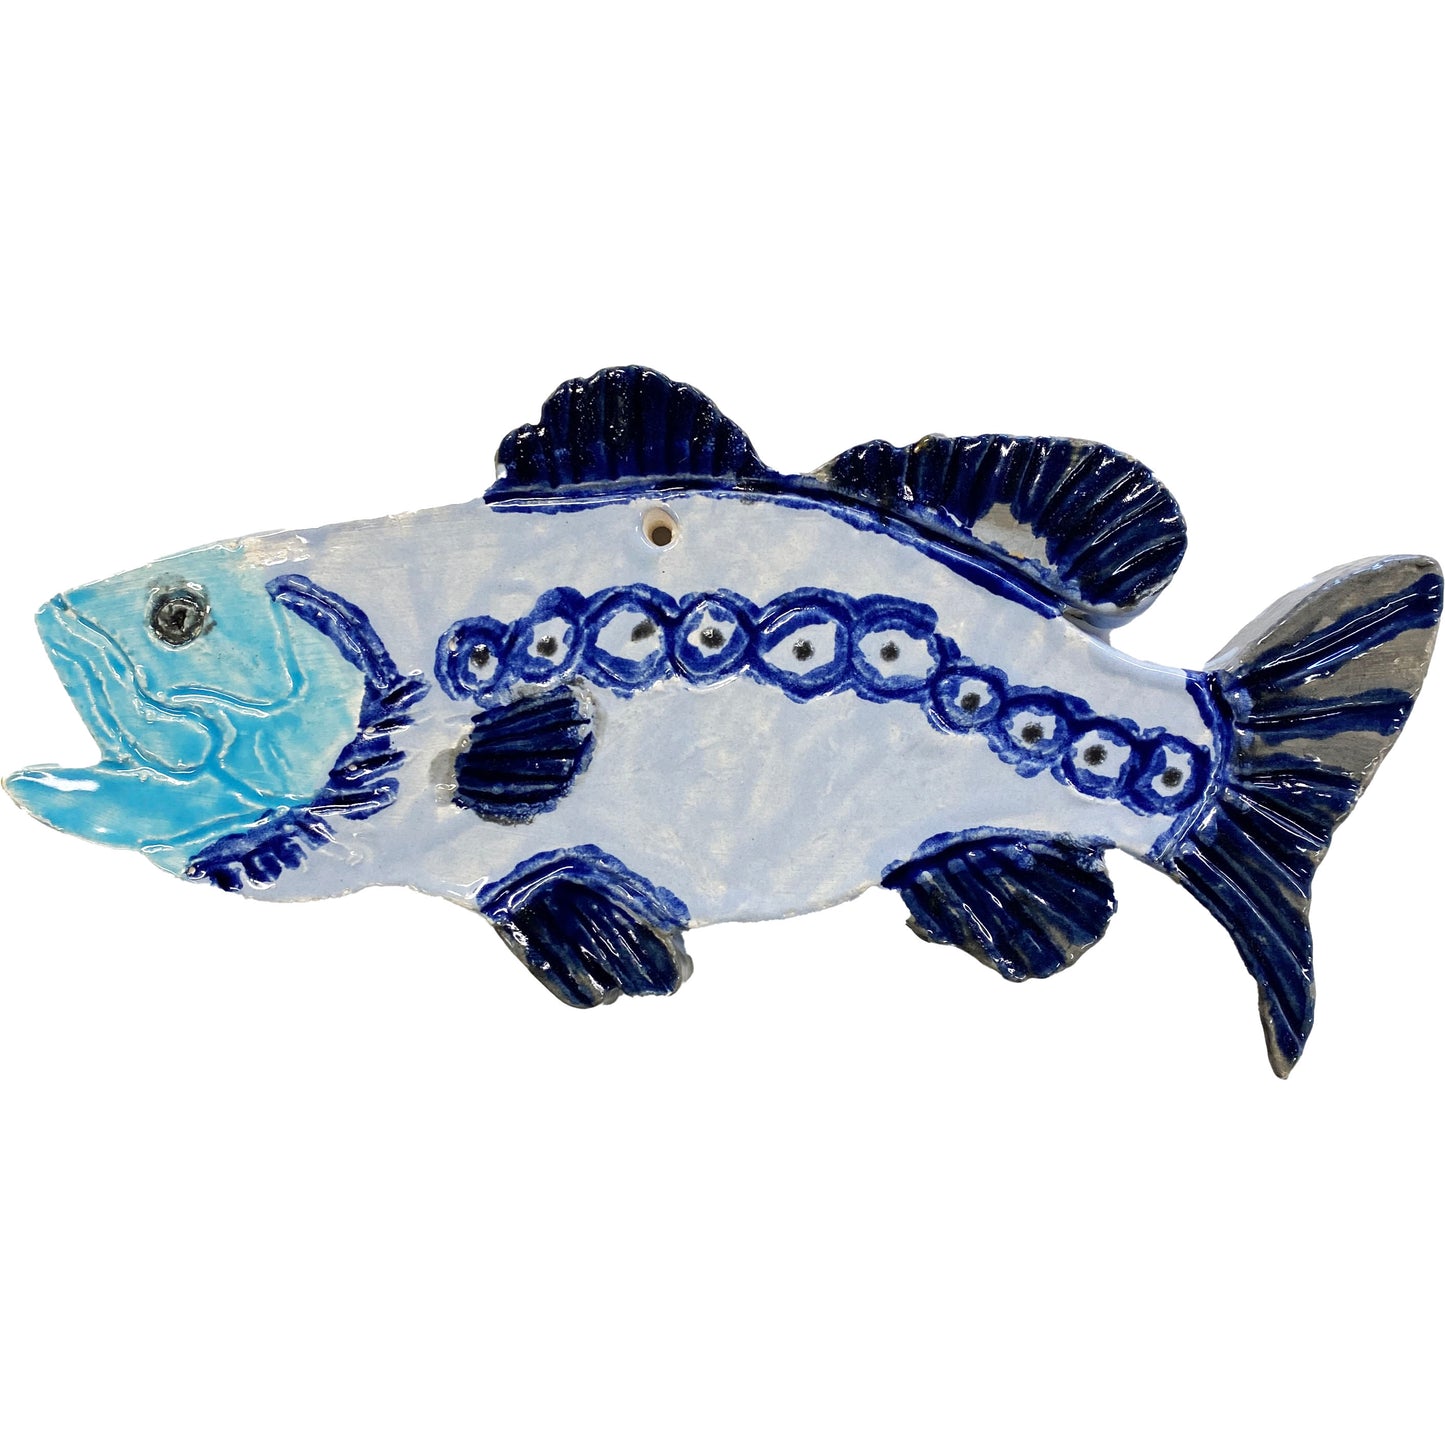 Ceramic Arts Handmade Clay Crafts Fresh Fish Glazed 7.5-inch x 3.5-inch